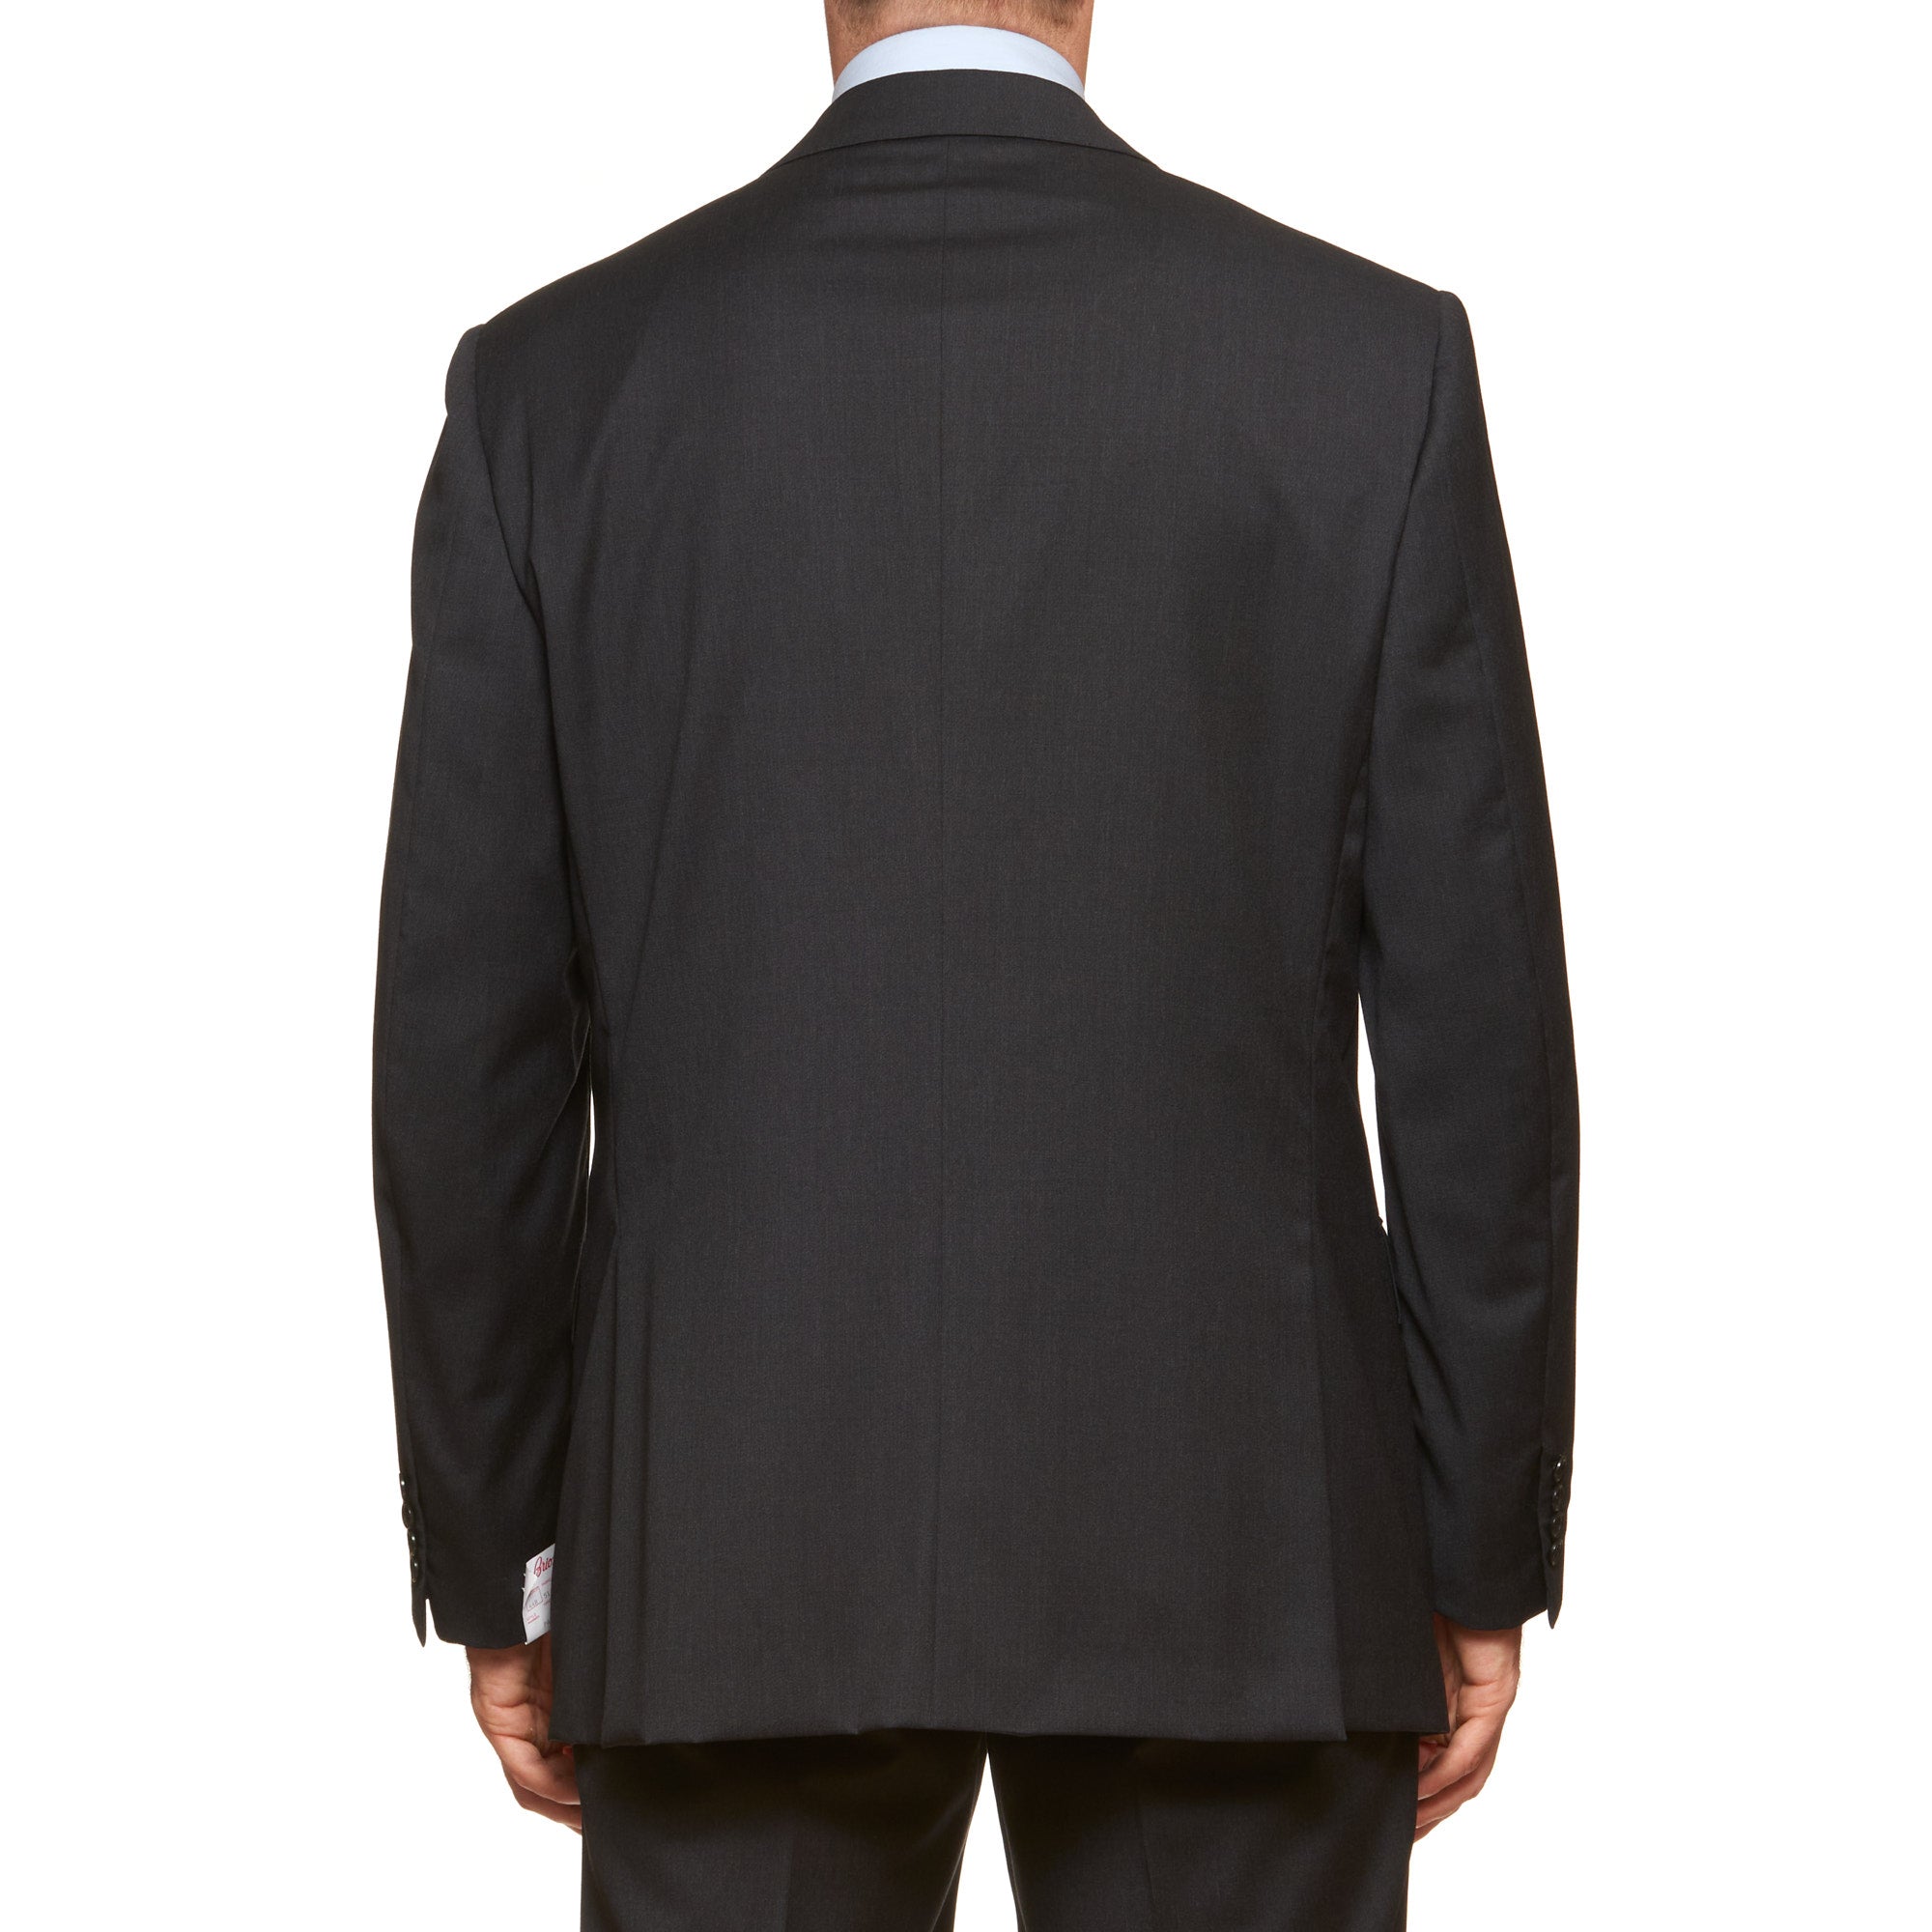 BRIONI "PARLAMENTO" Charcoal Gray Wool Super 150' Business Suit EU 54 NEW US 44